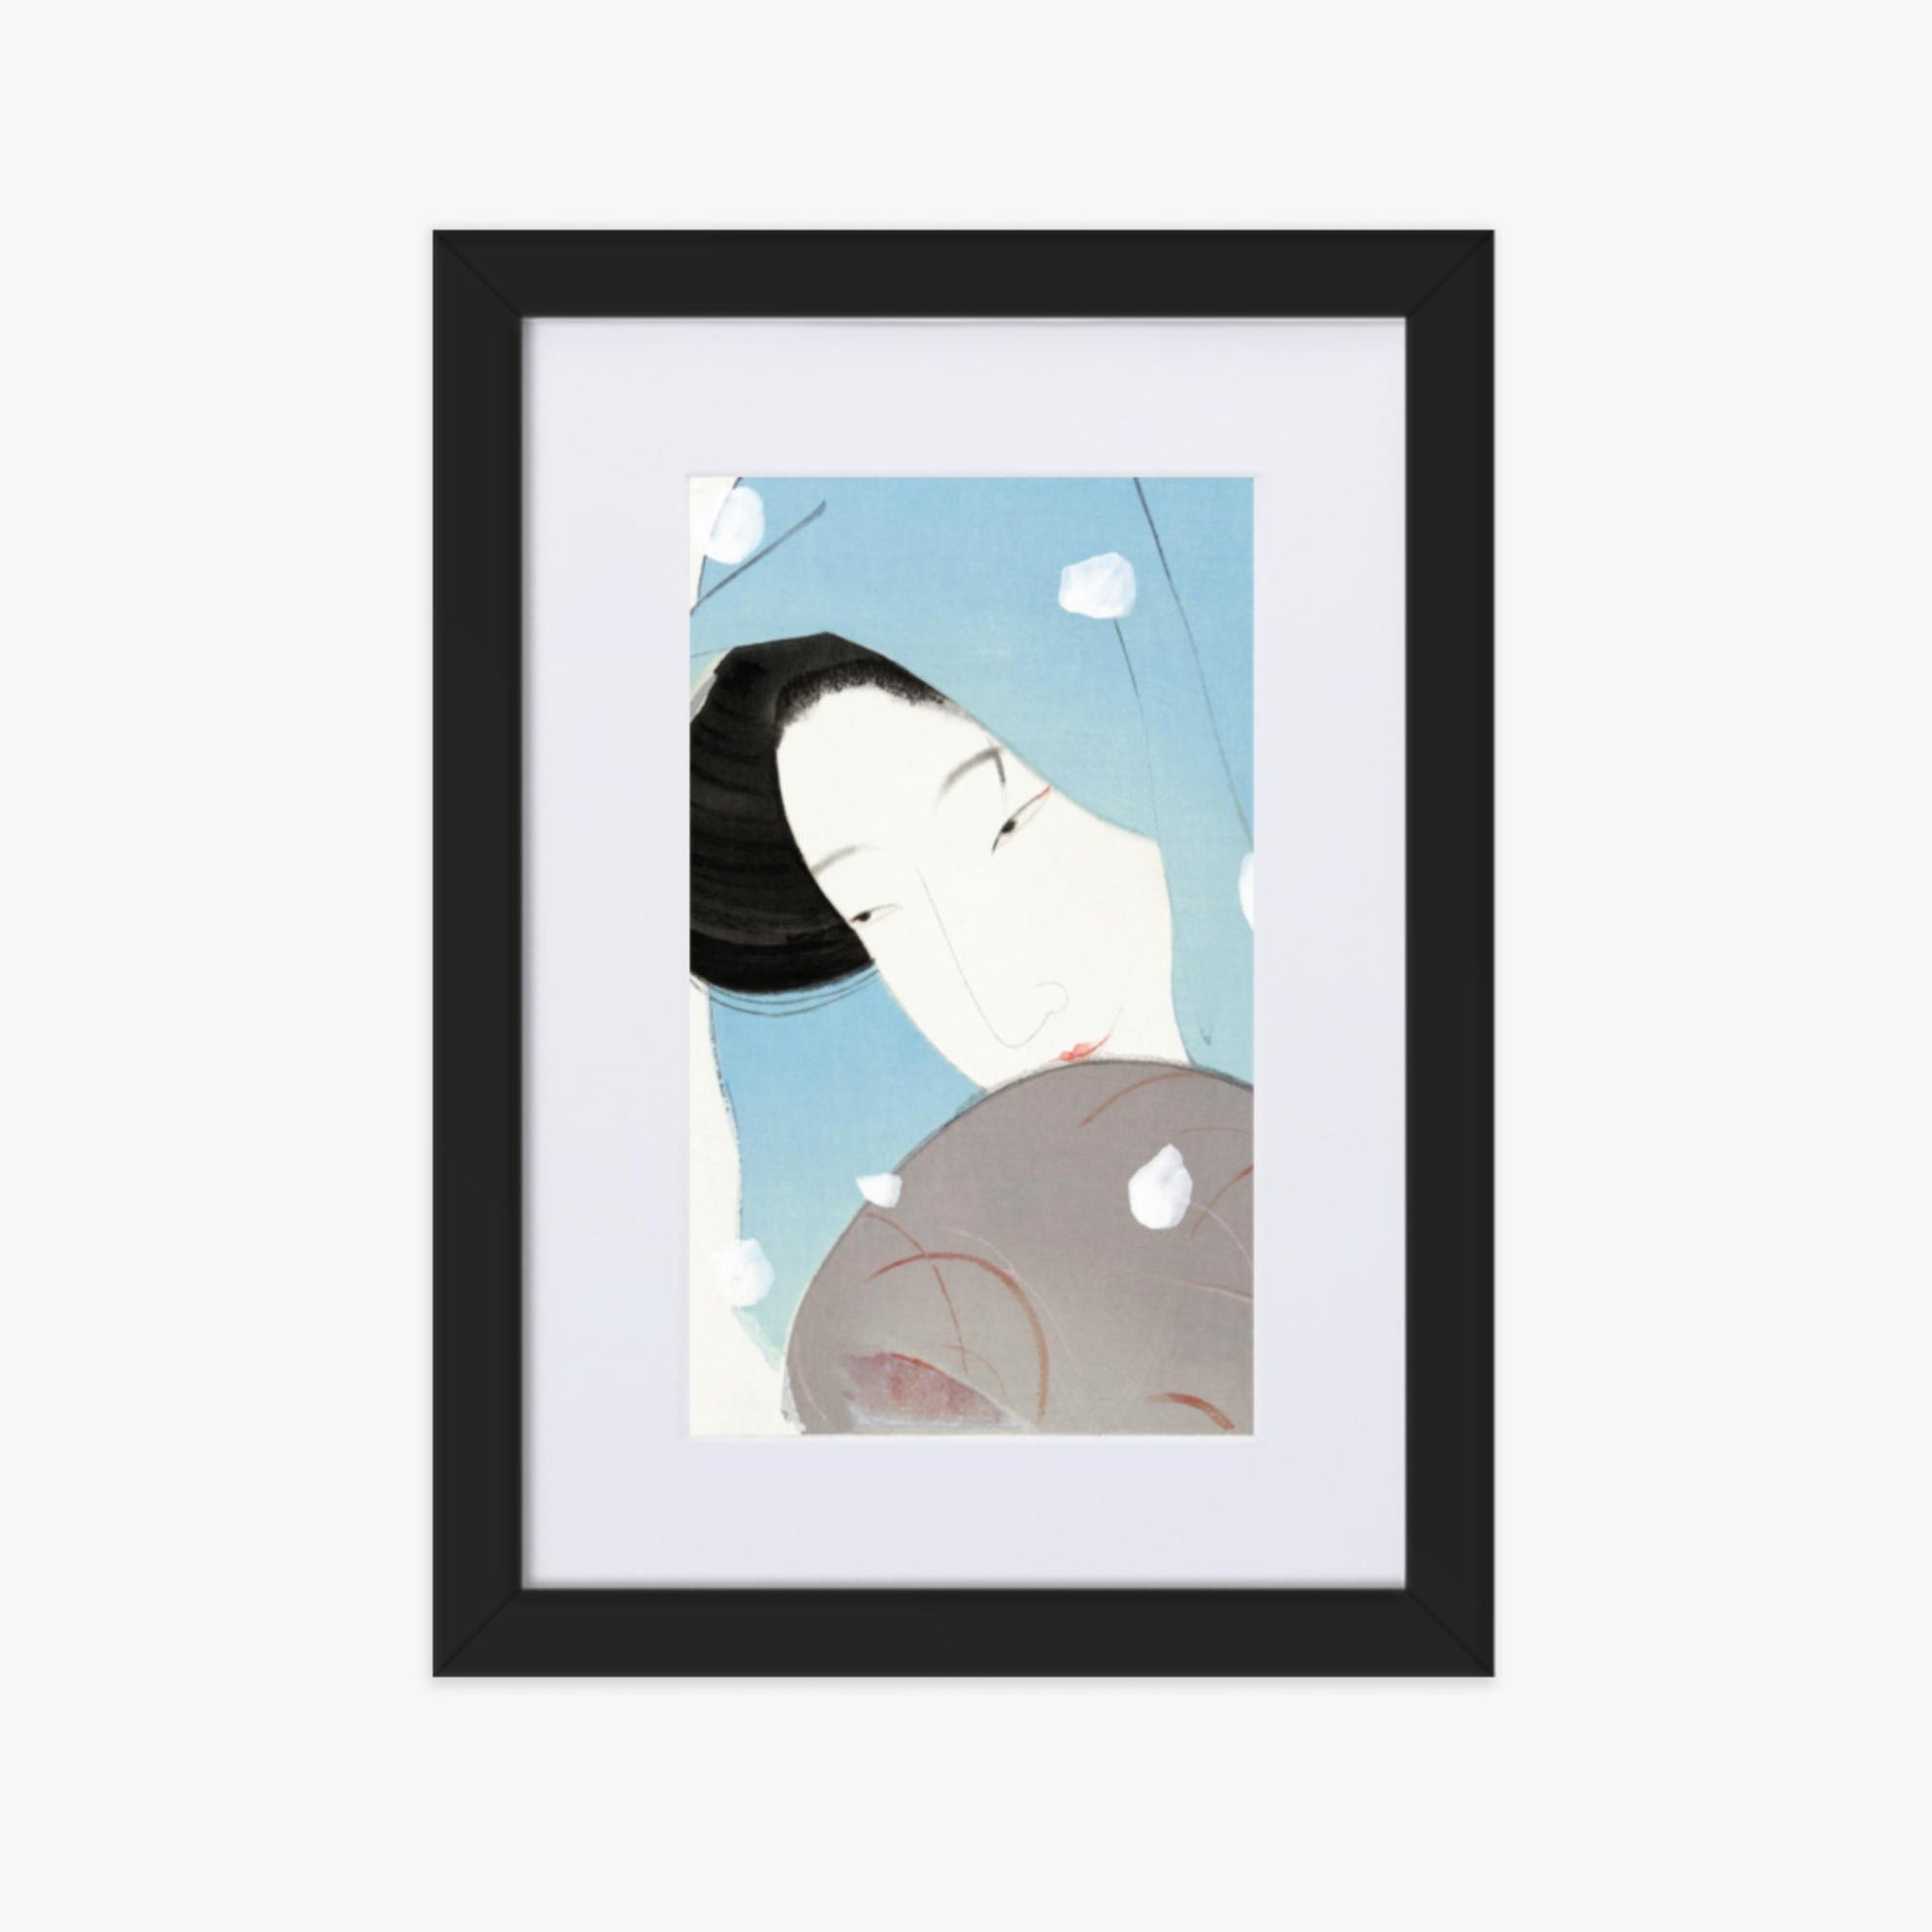 Kitano Tsunetomi - Umegawa 21x30 cm Poster With Black Frame